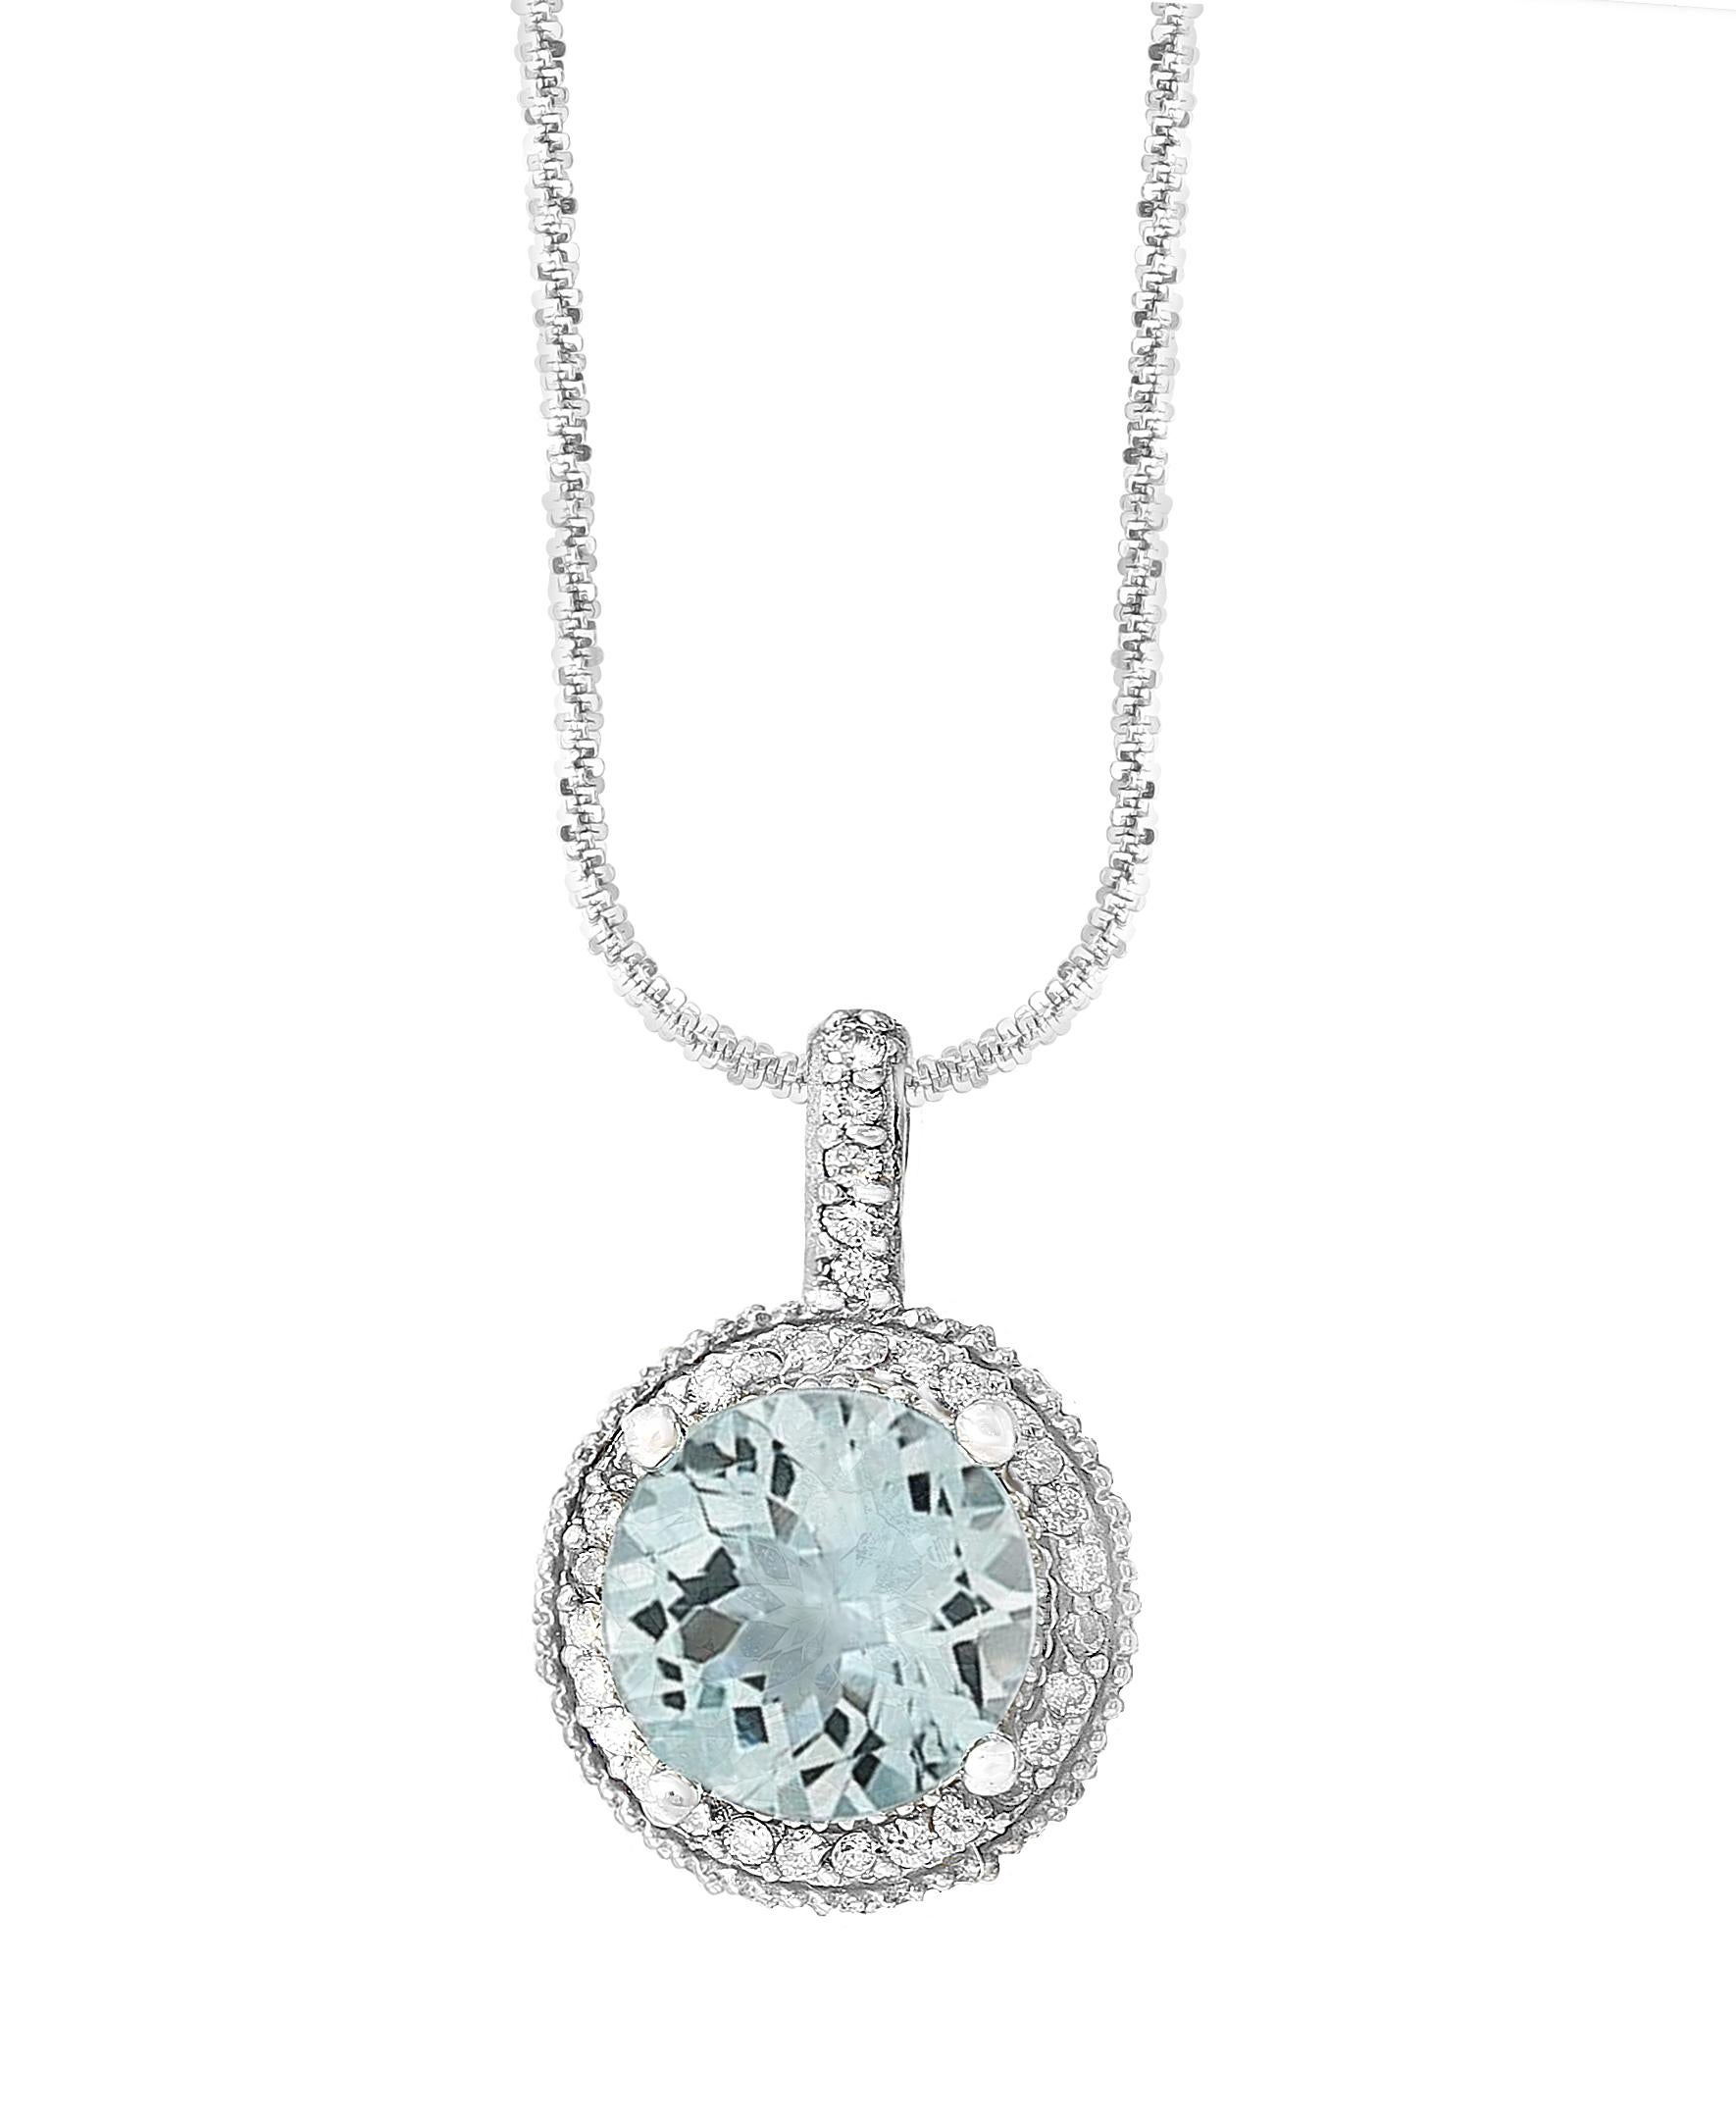 5.66 Carat Aquamarine and 1 Carat Diamond Pendant / Necklace 14 Karat White Gold 6